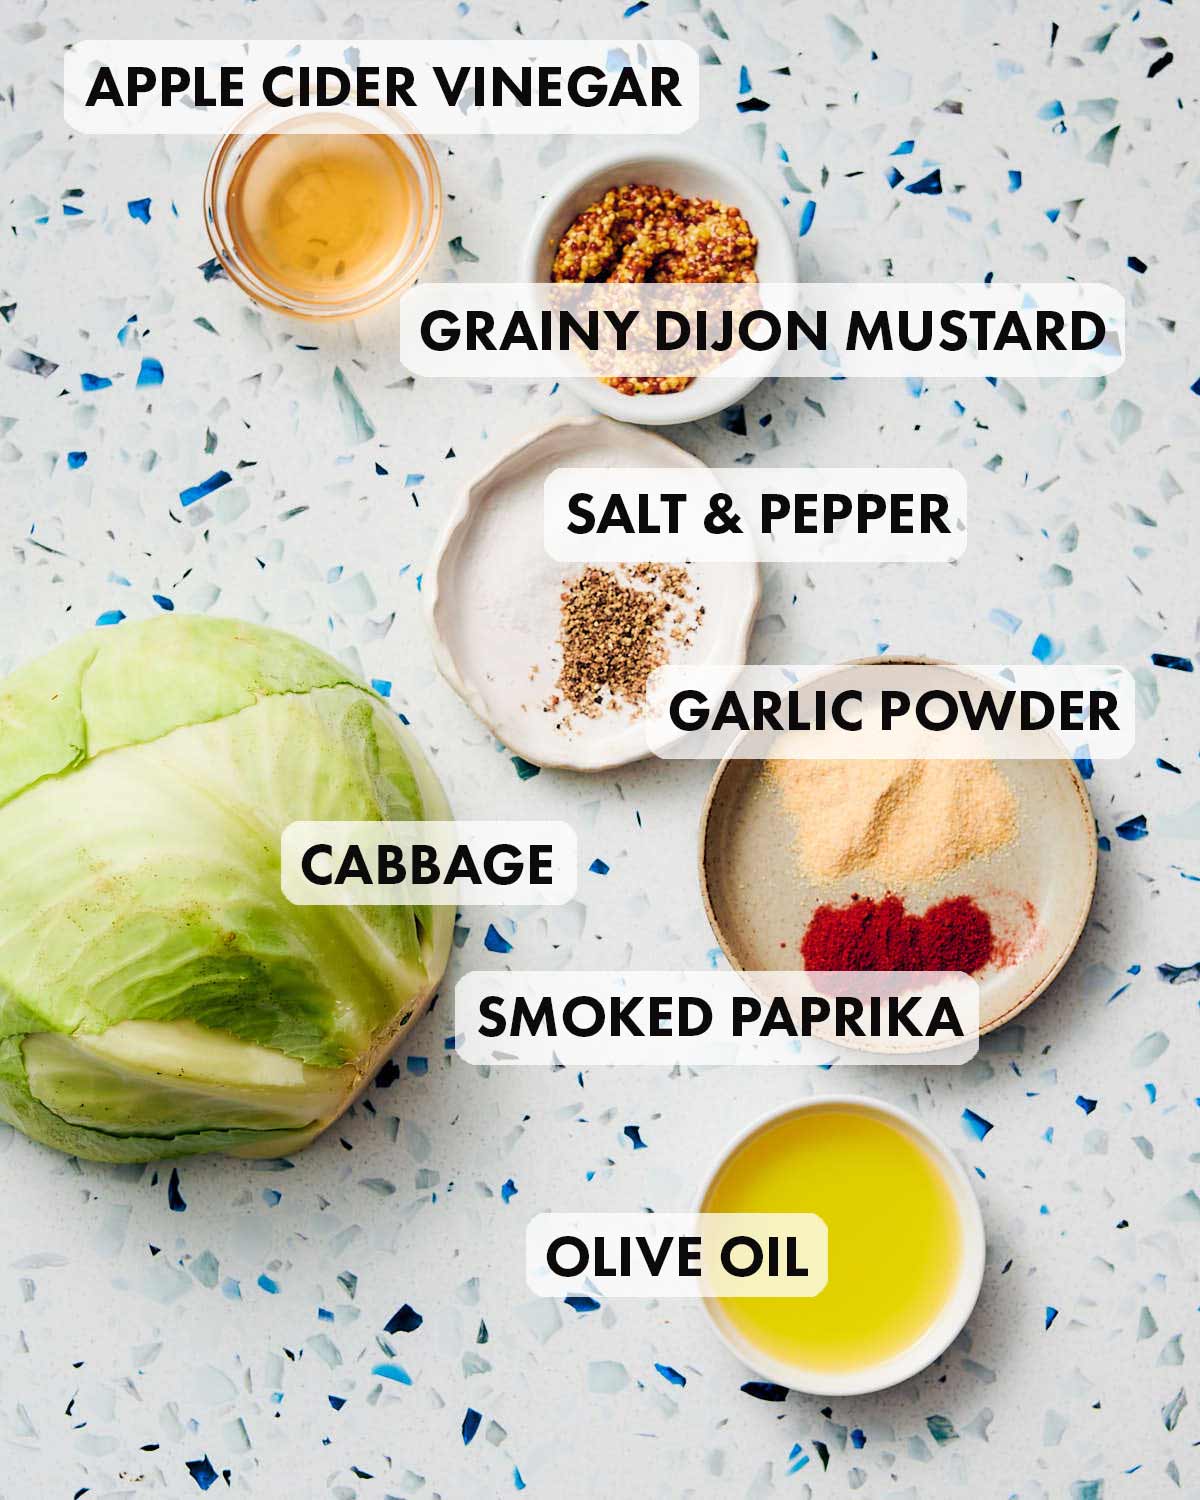 Ingredients to make Air Fryer Cabbage wedges.